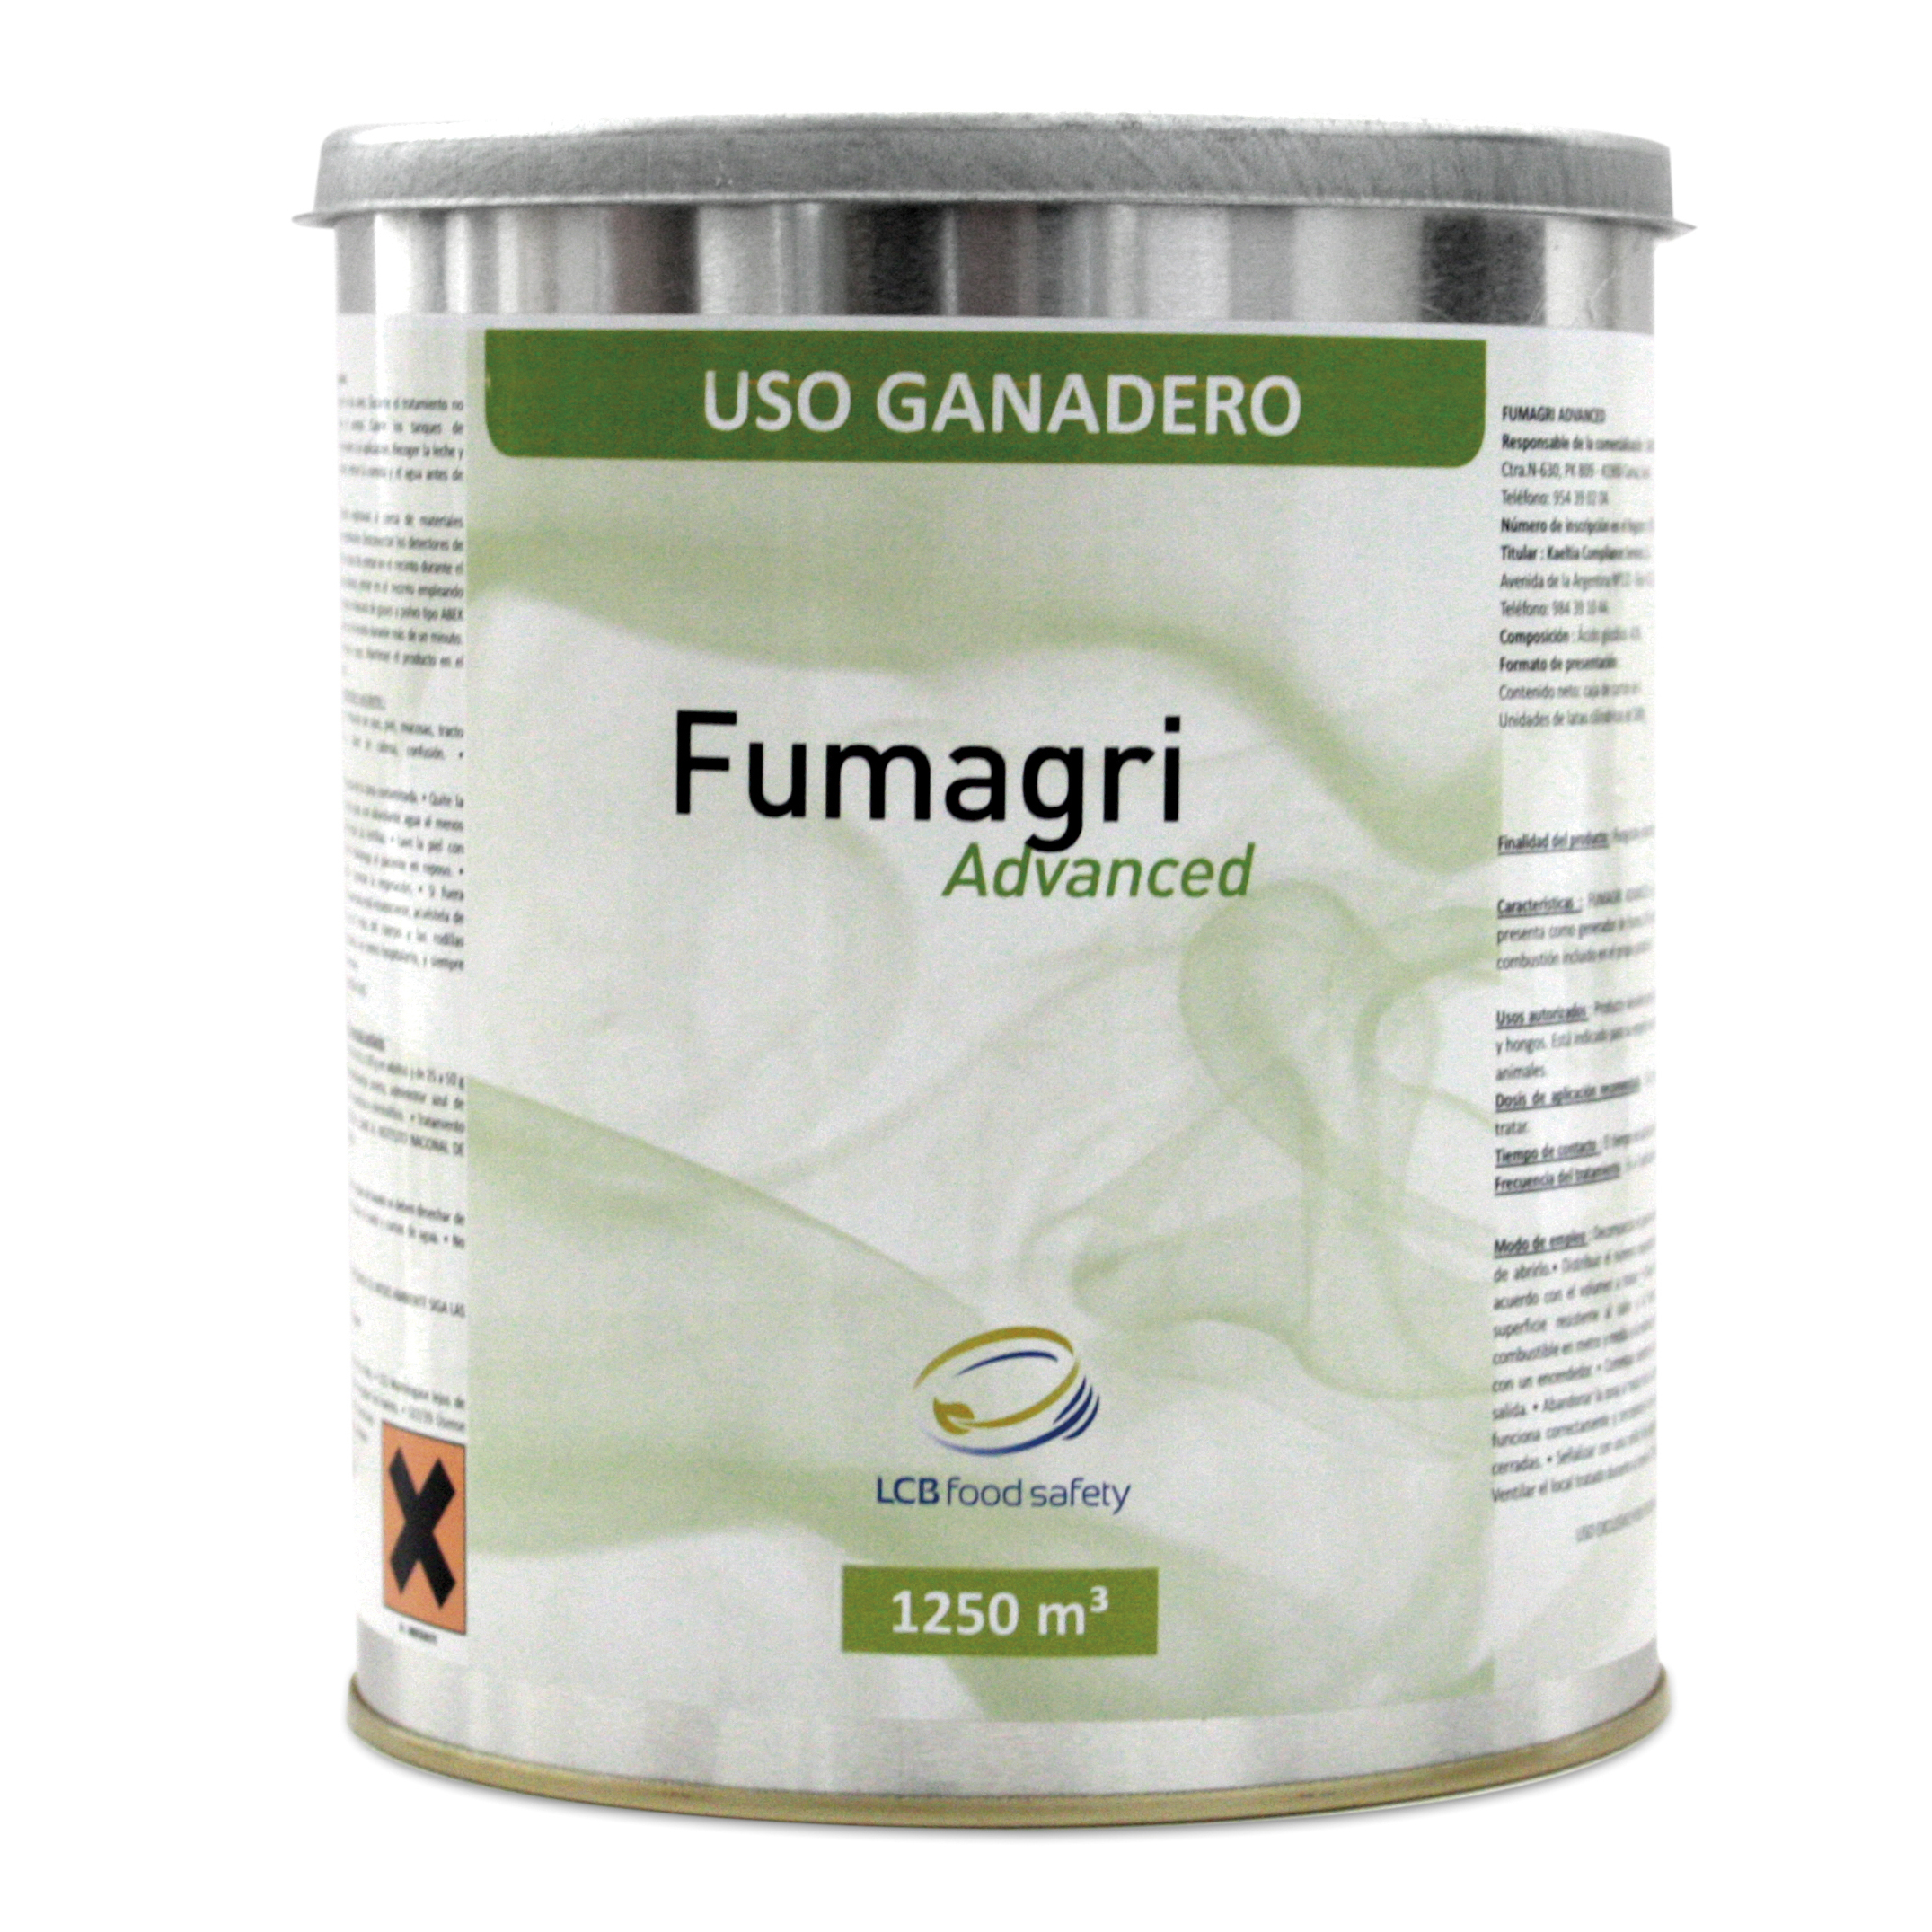 Fumagri Advanced